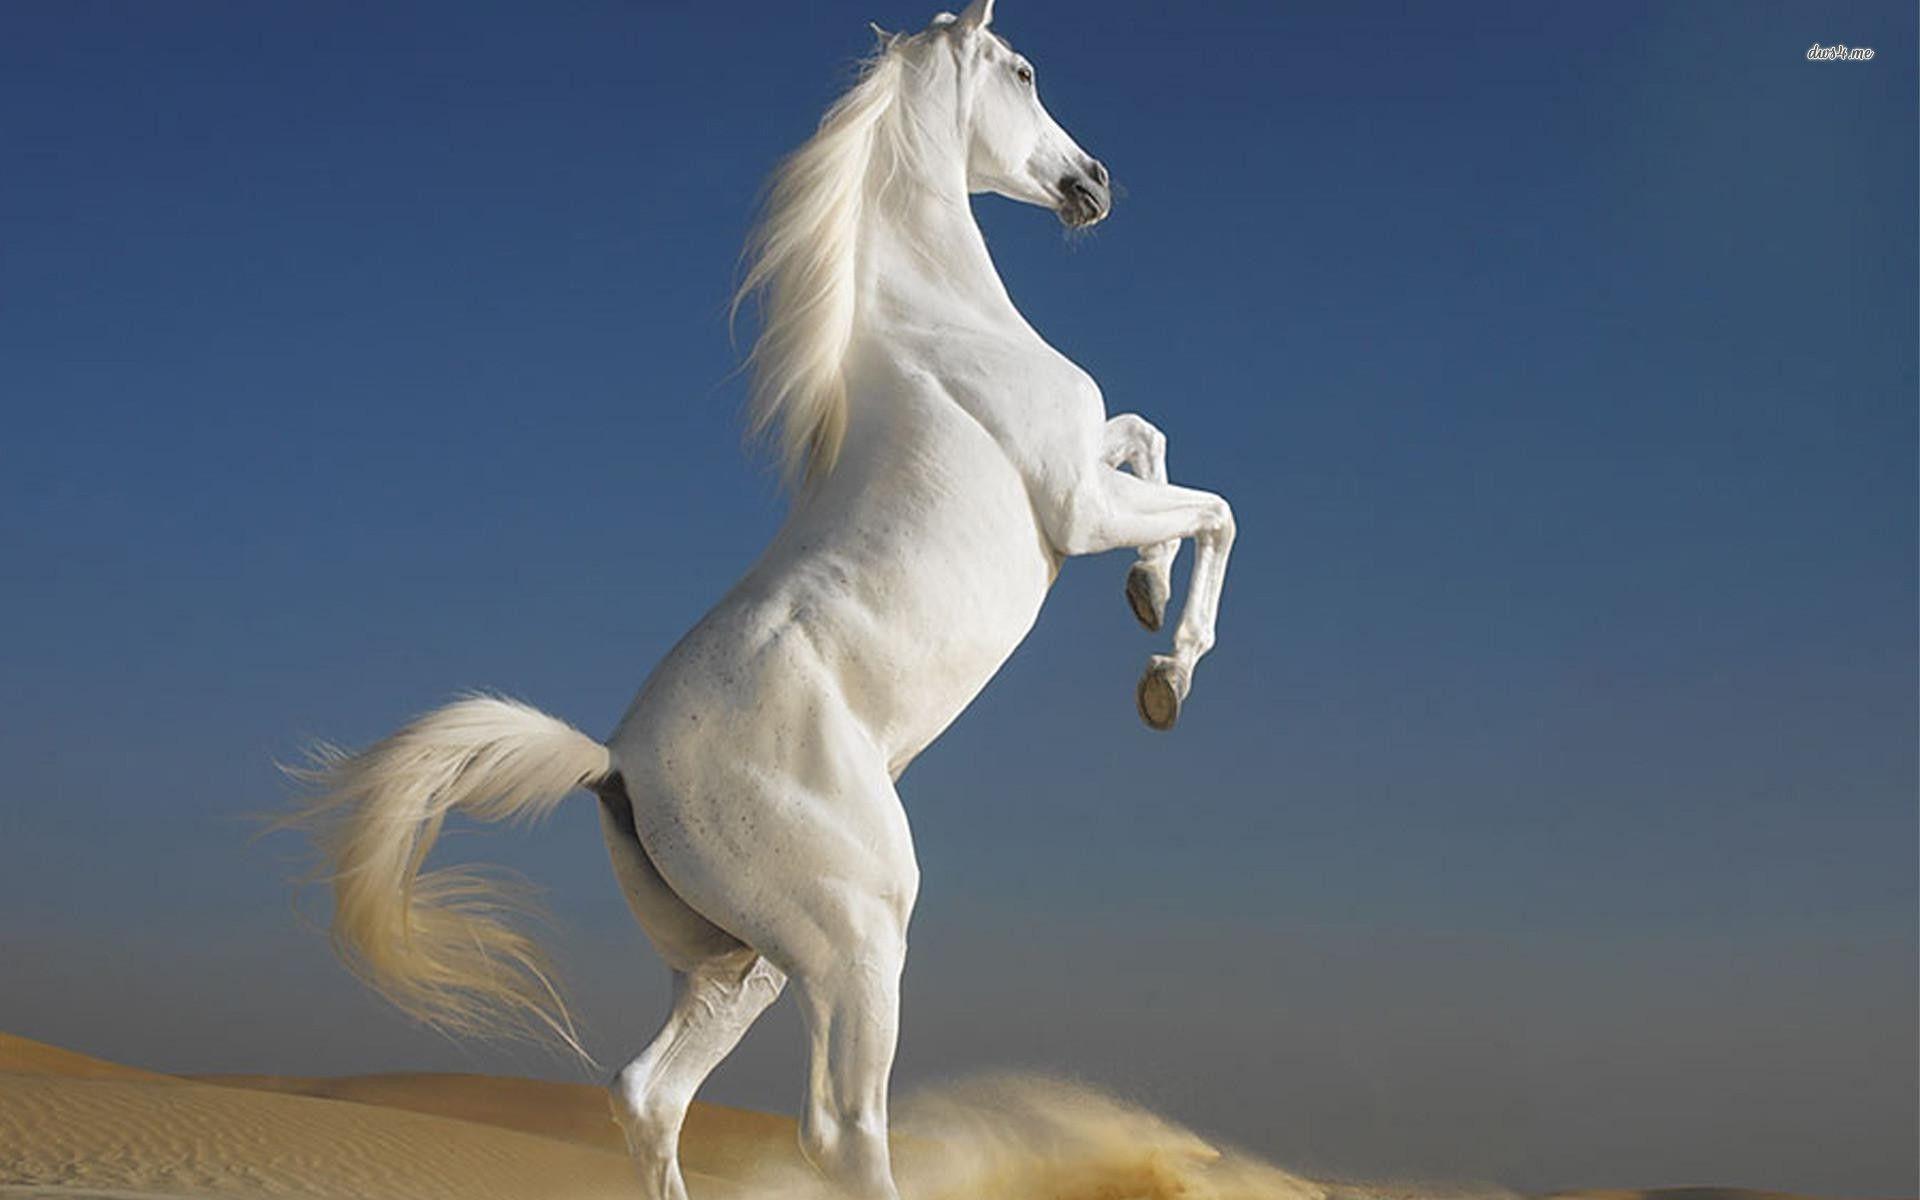 Hd Horse Image